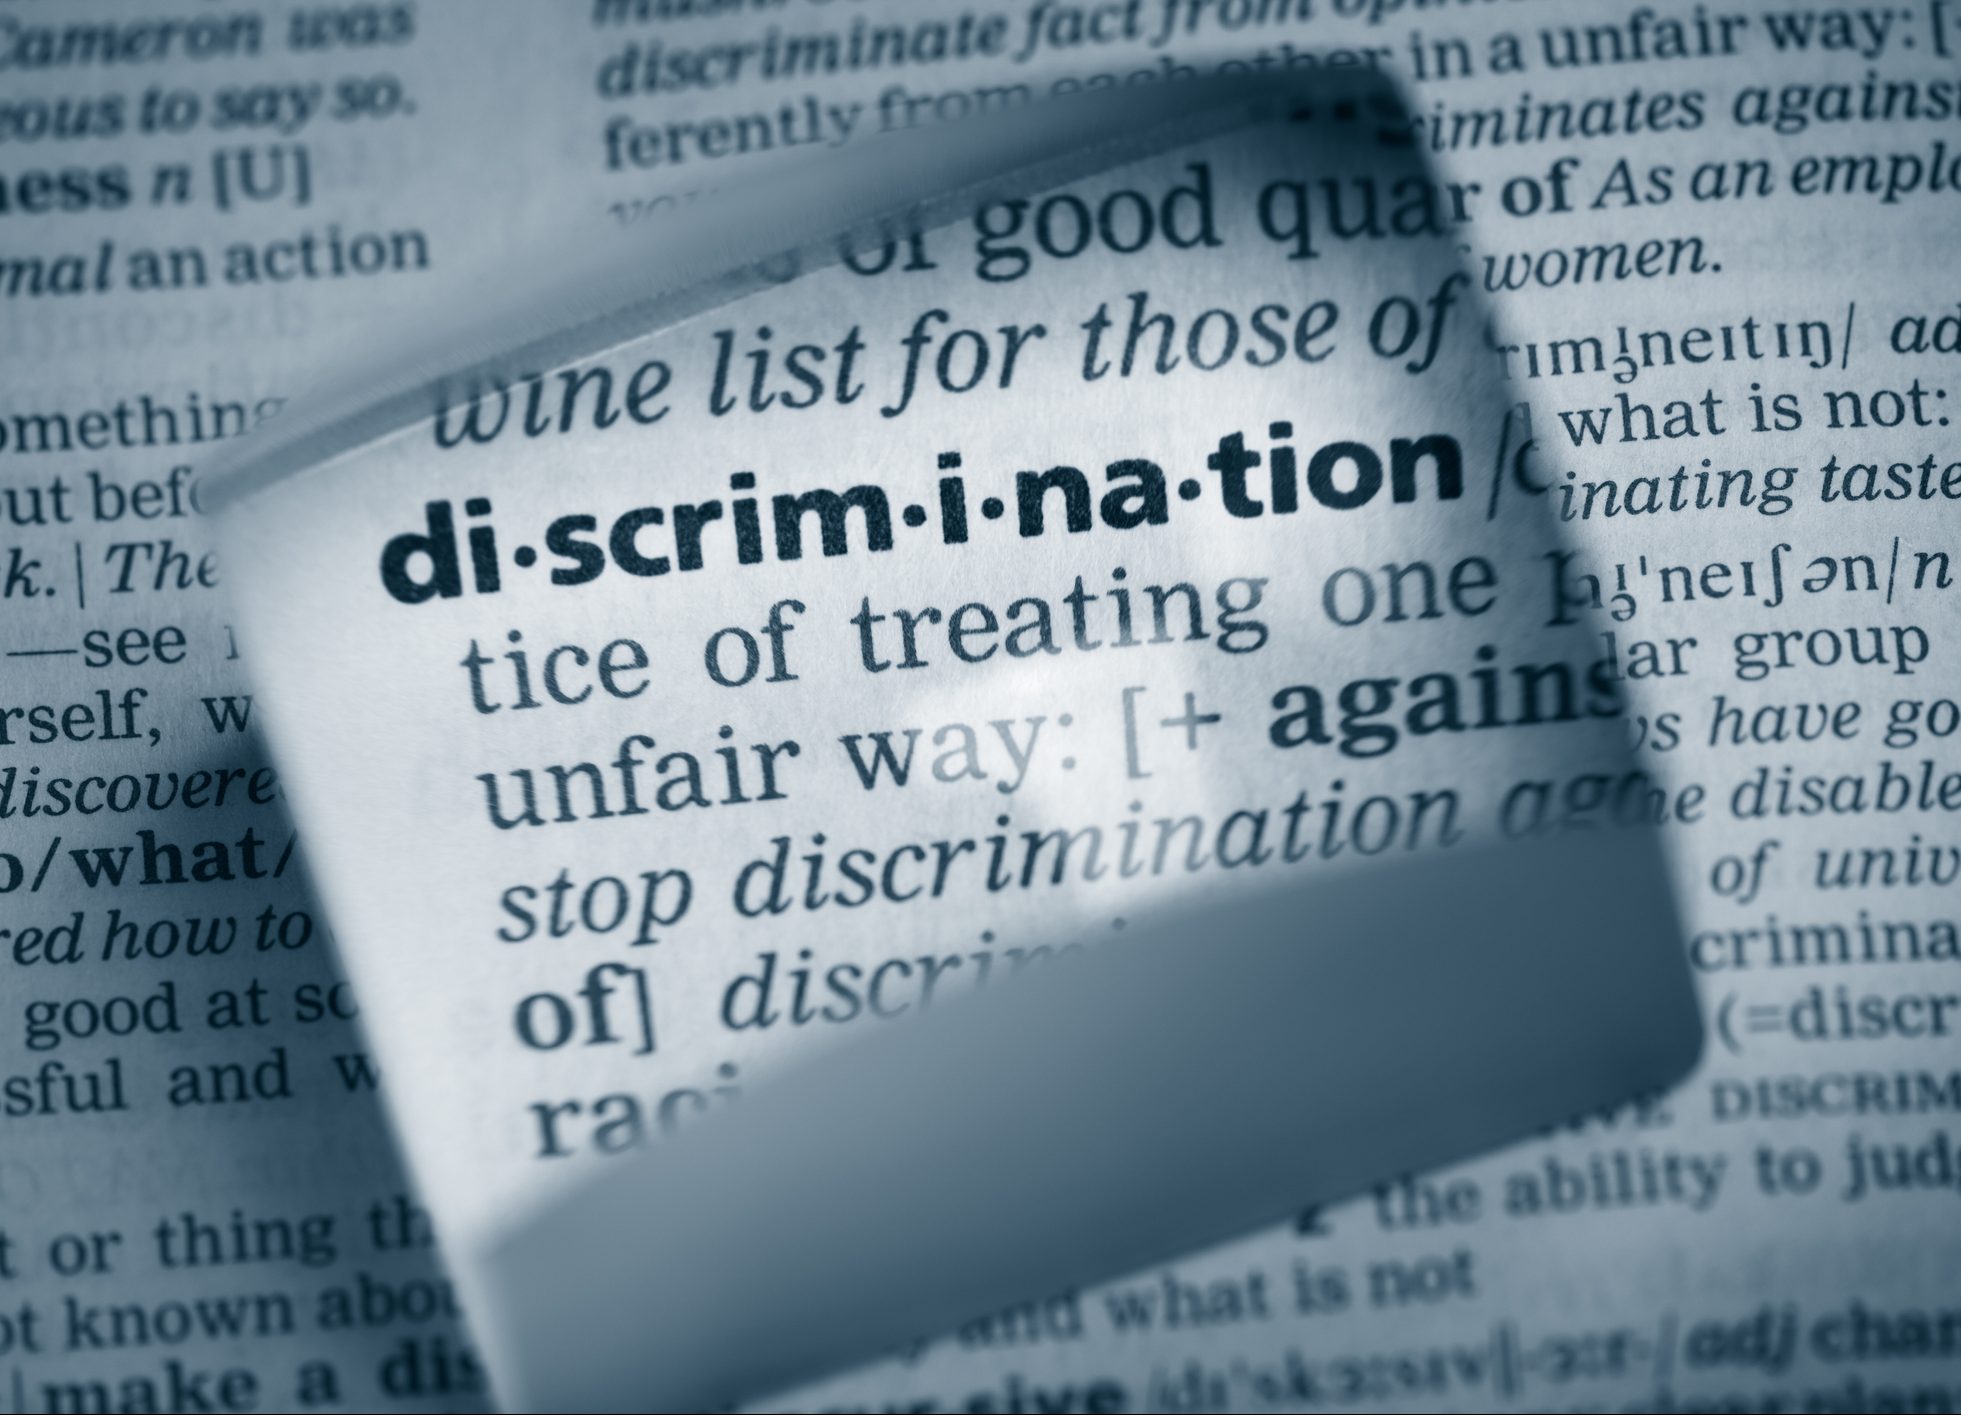 FUNIBER-definition-discrimination